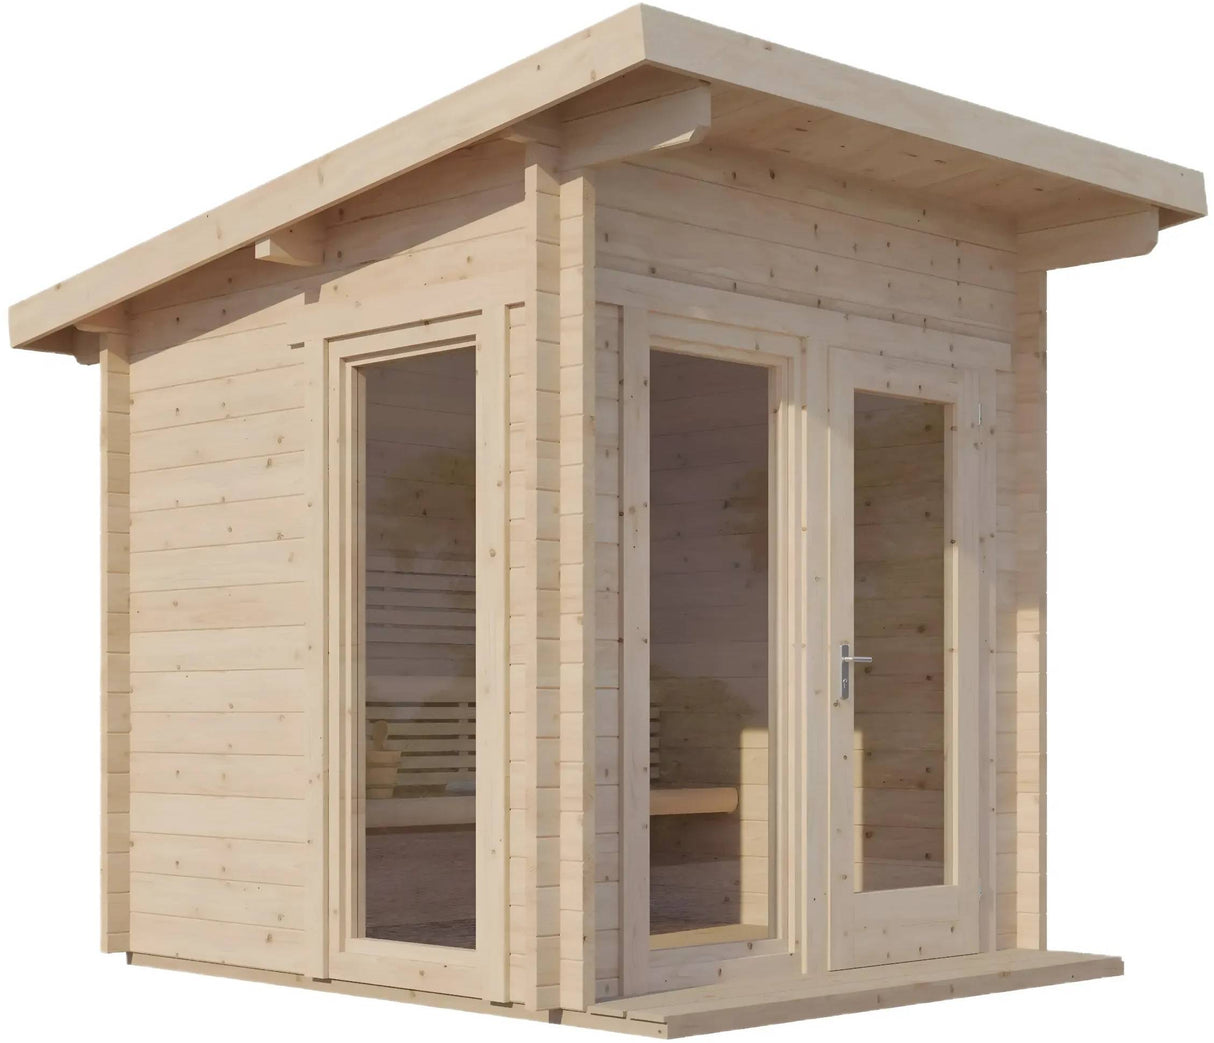 ZiahCare's SaunaLife Model G4 Outdoor Home Sauna Kit Mockup Image 5